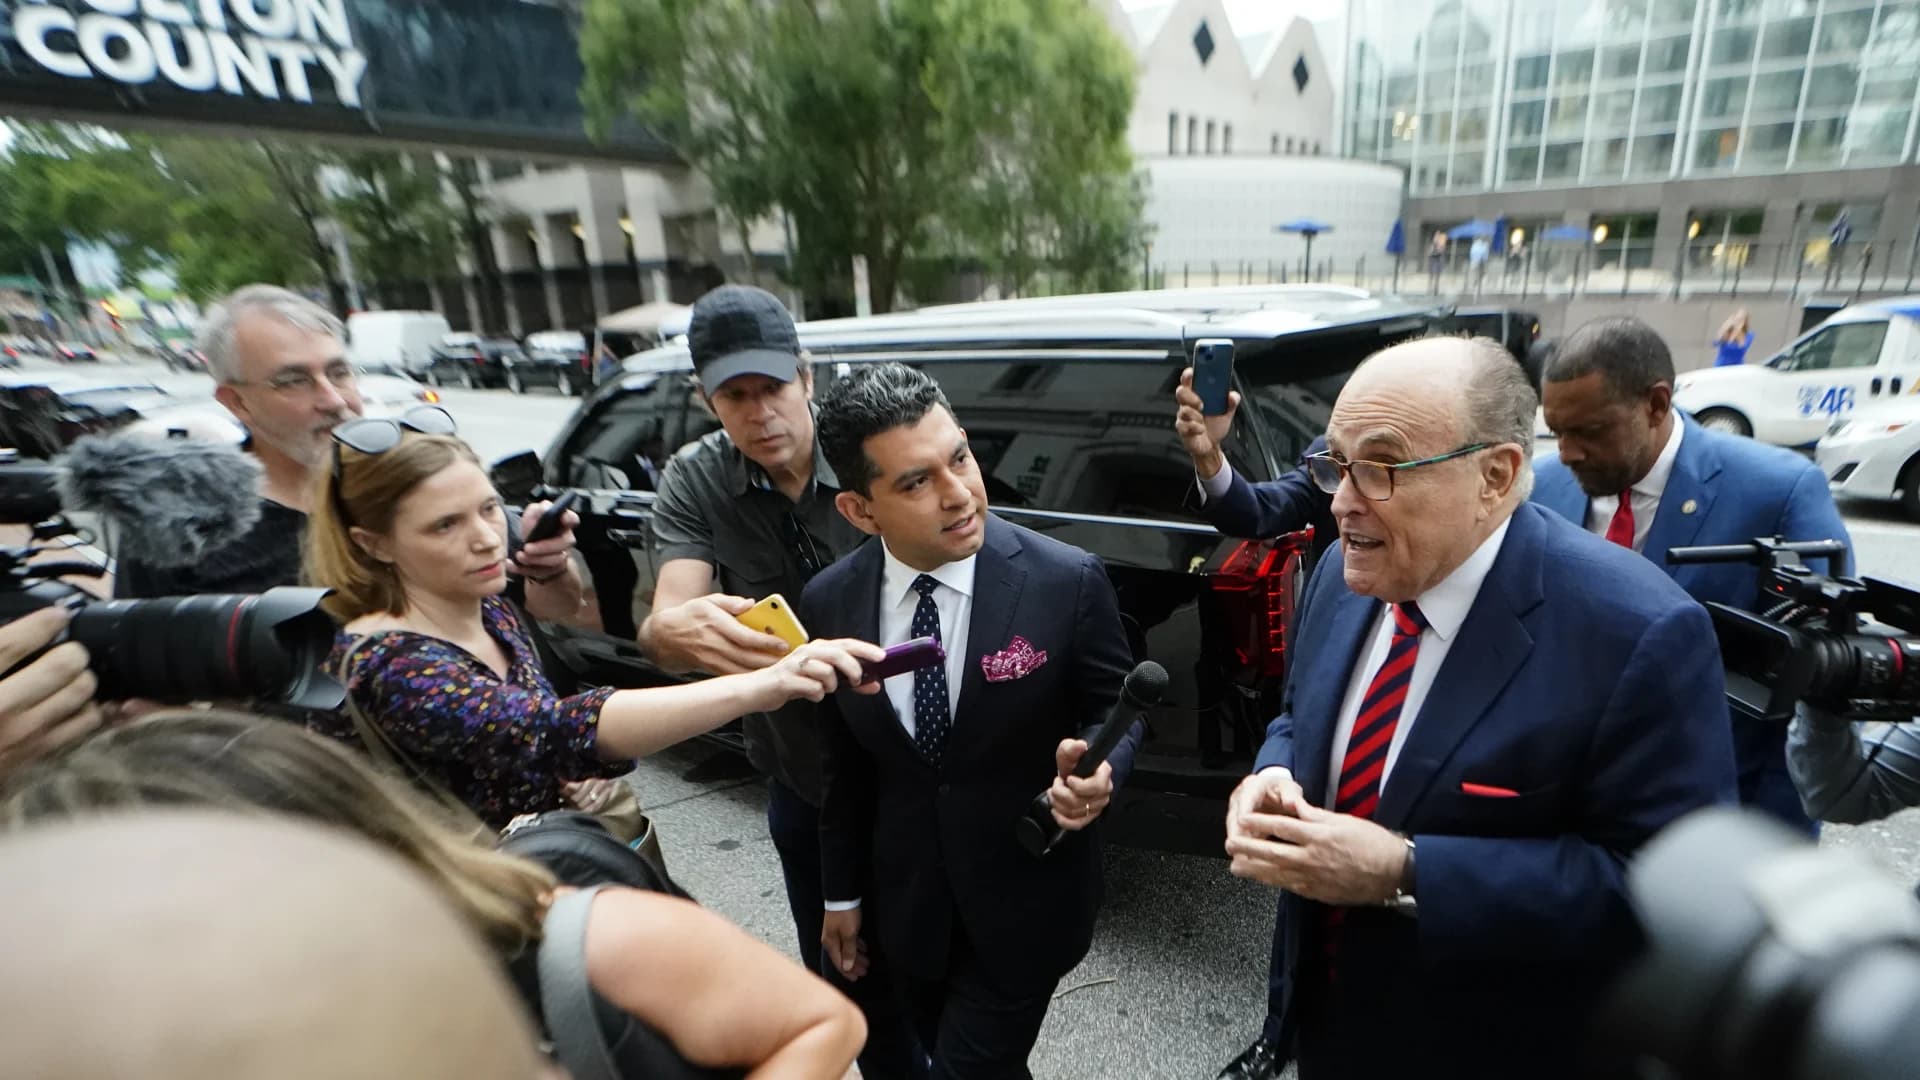 Rudy Giuliani faces grand jury in Georgia 2020 election probe